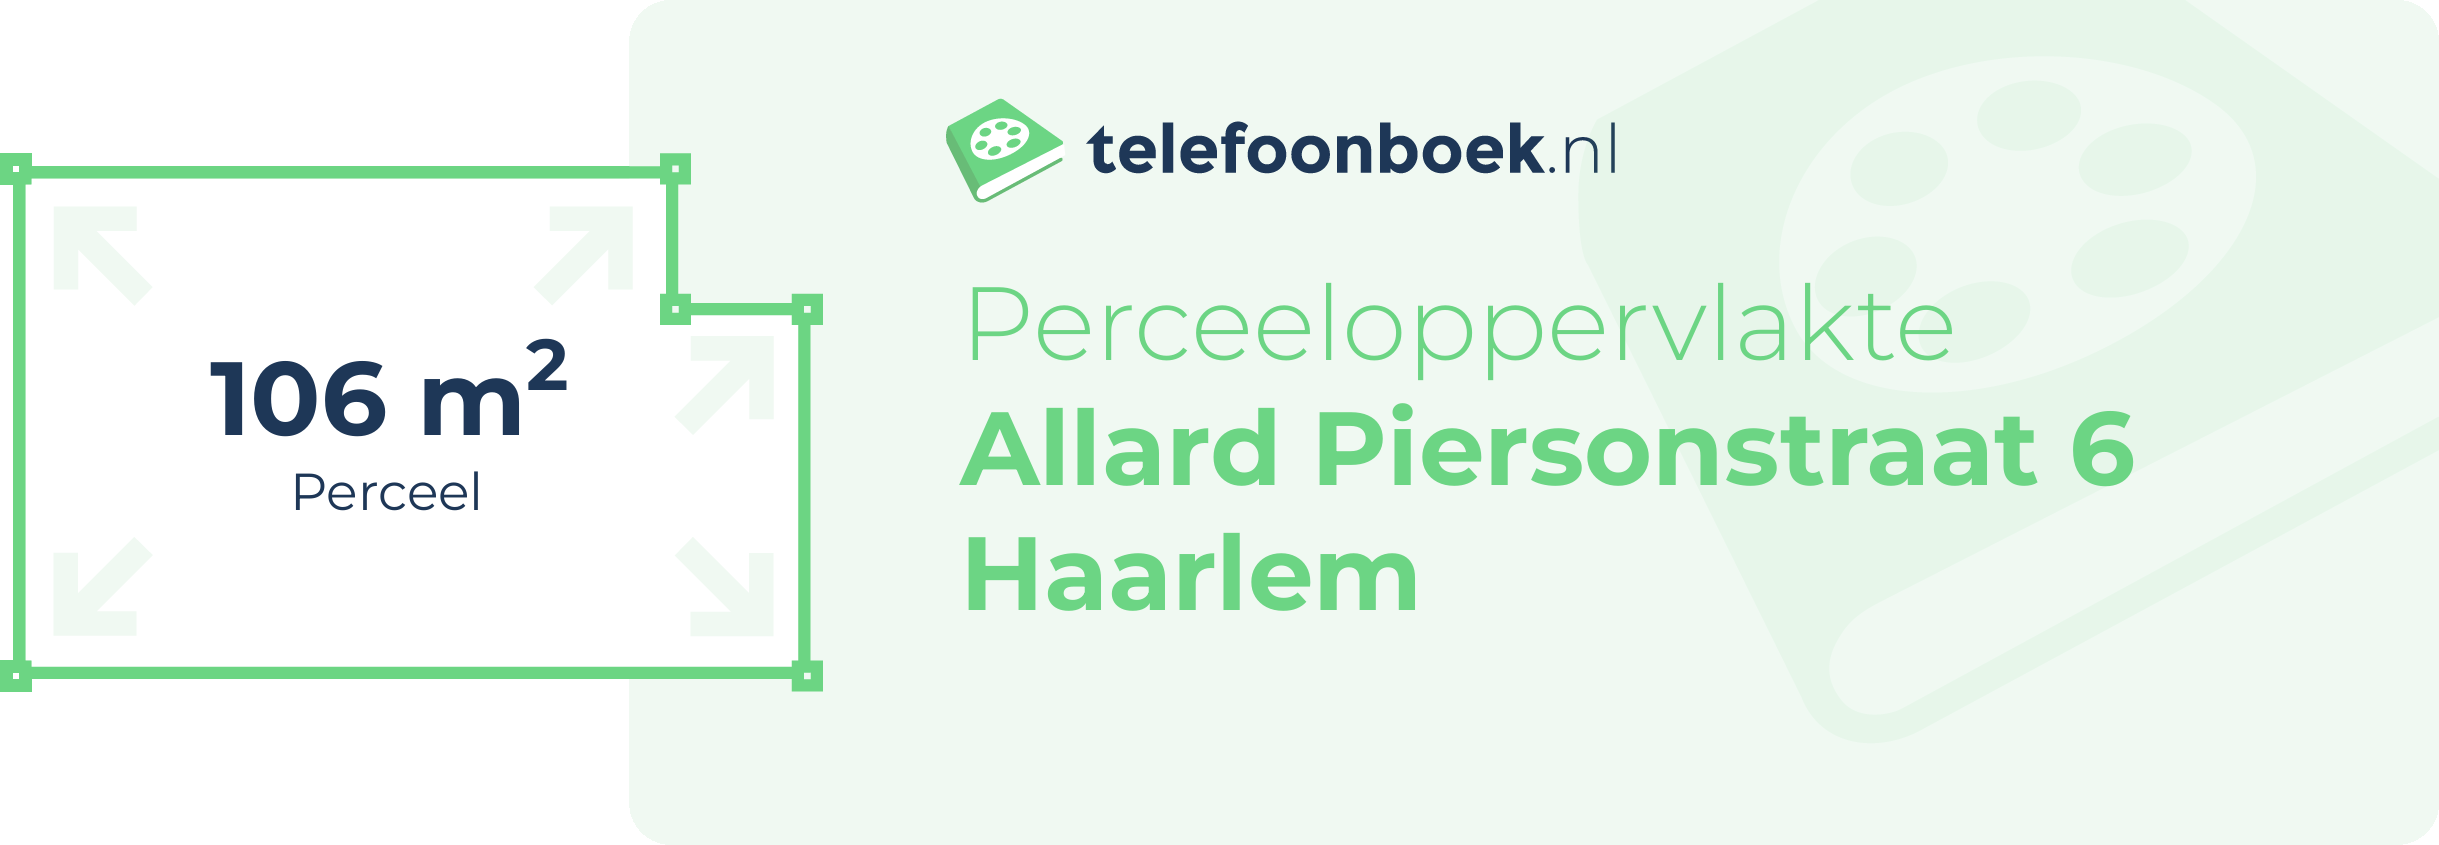 Perceeloppervlakte Allard Piersonstraat 6 Haarlem